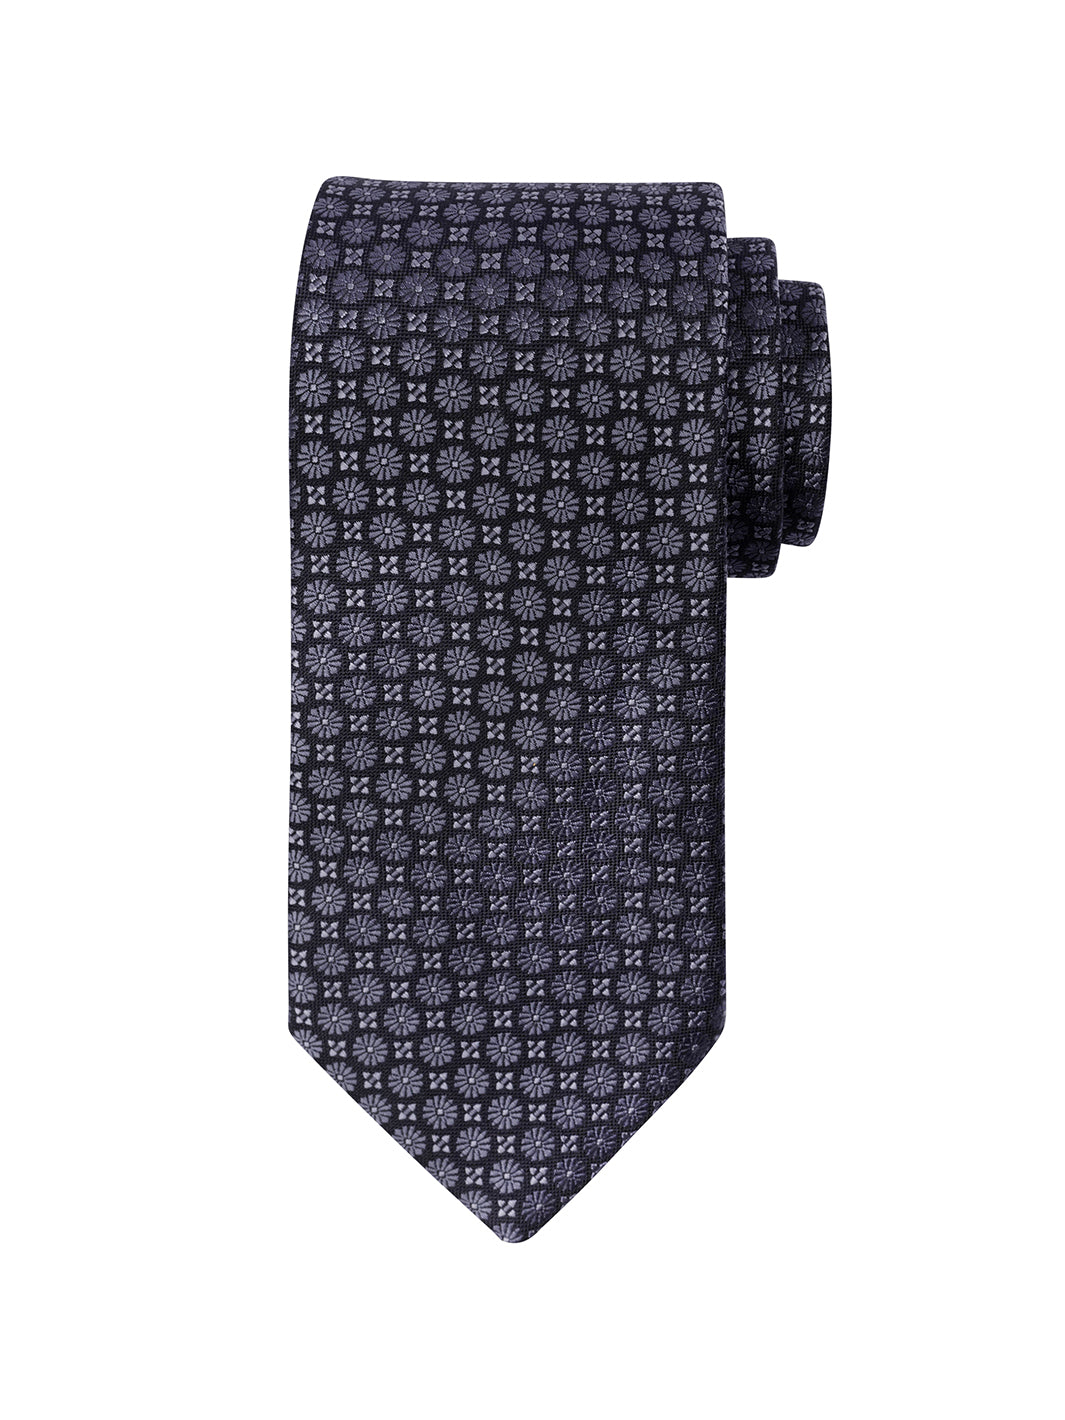 Men's T.O. Collection Medallion Tie - Black